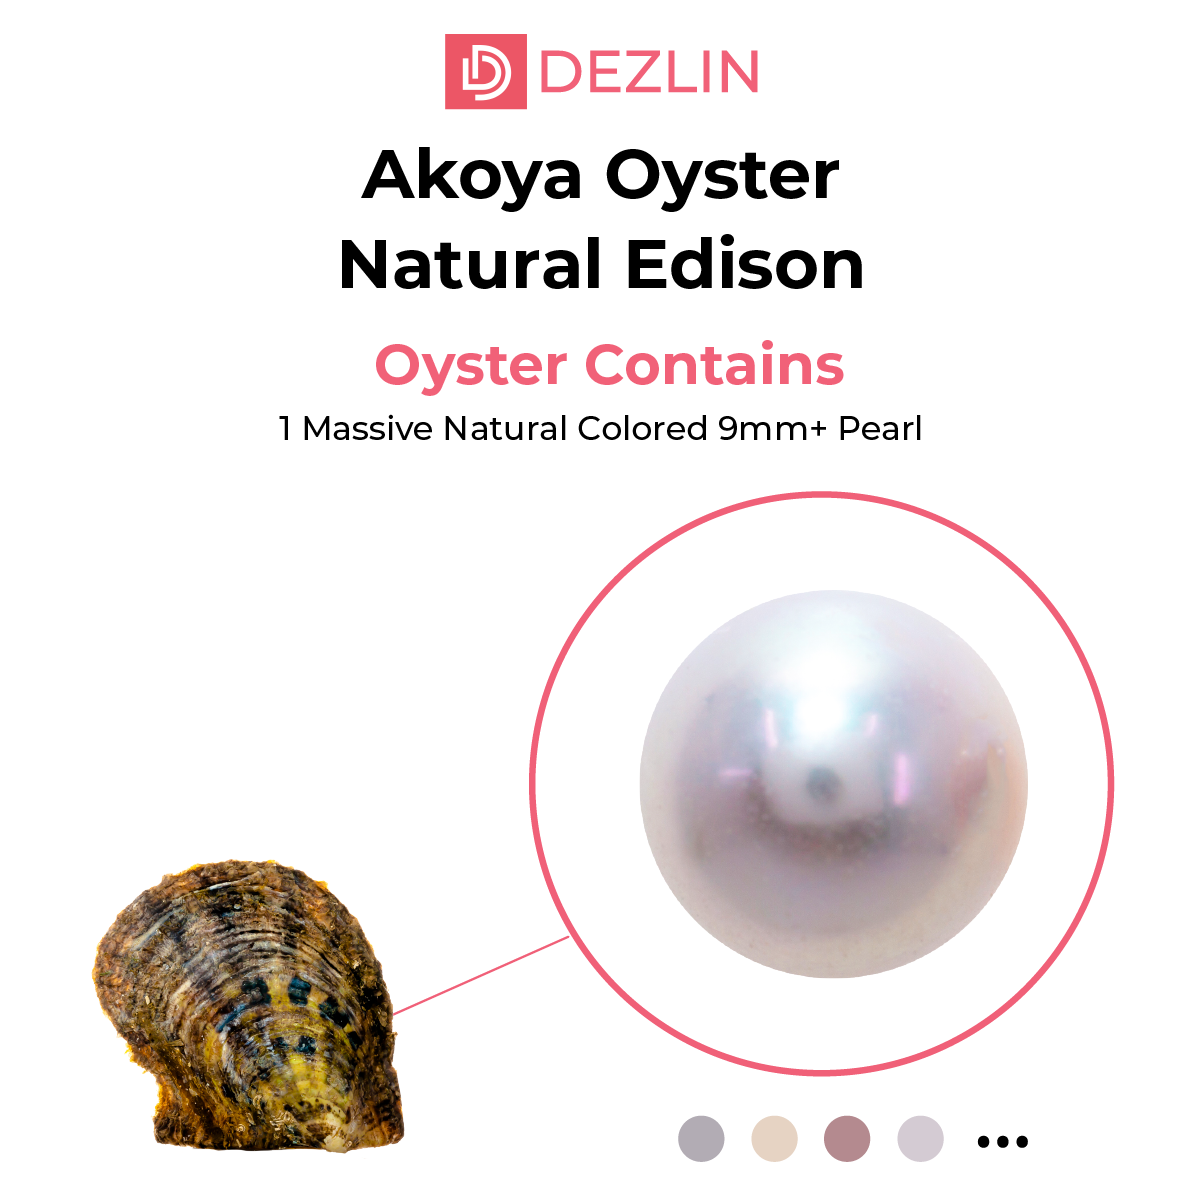 Edison 9mm+ Pearl en una concha de ostra Akoya